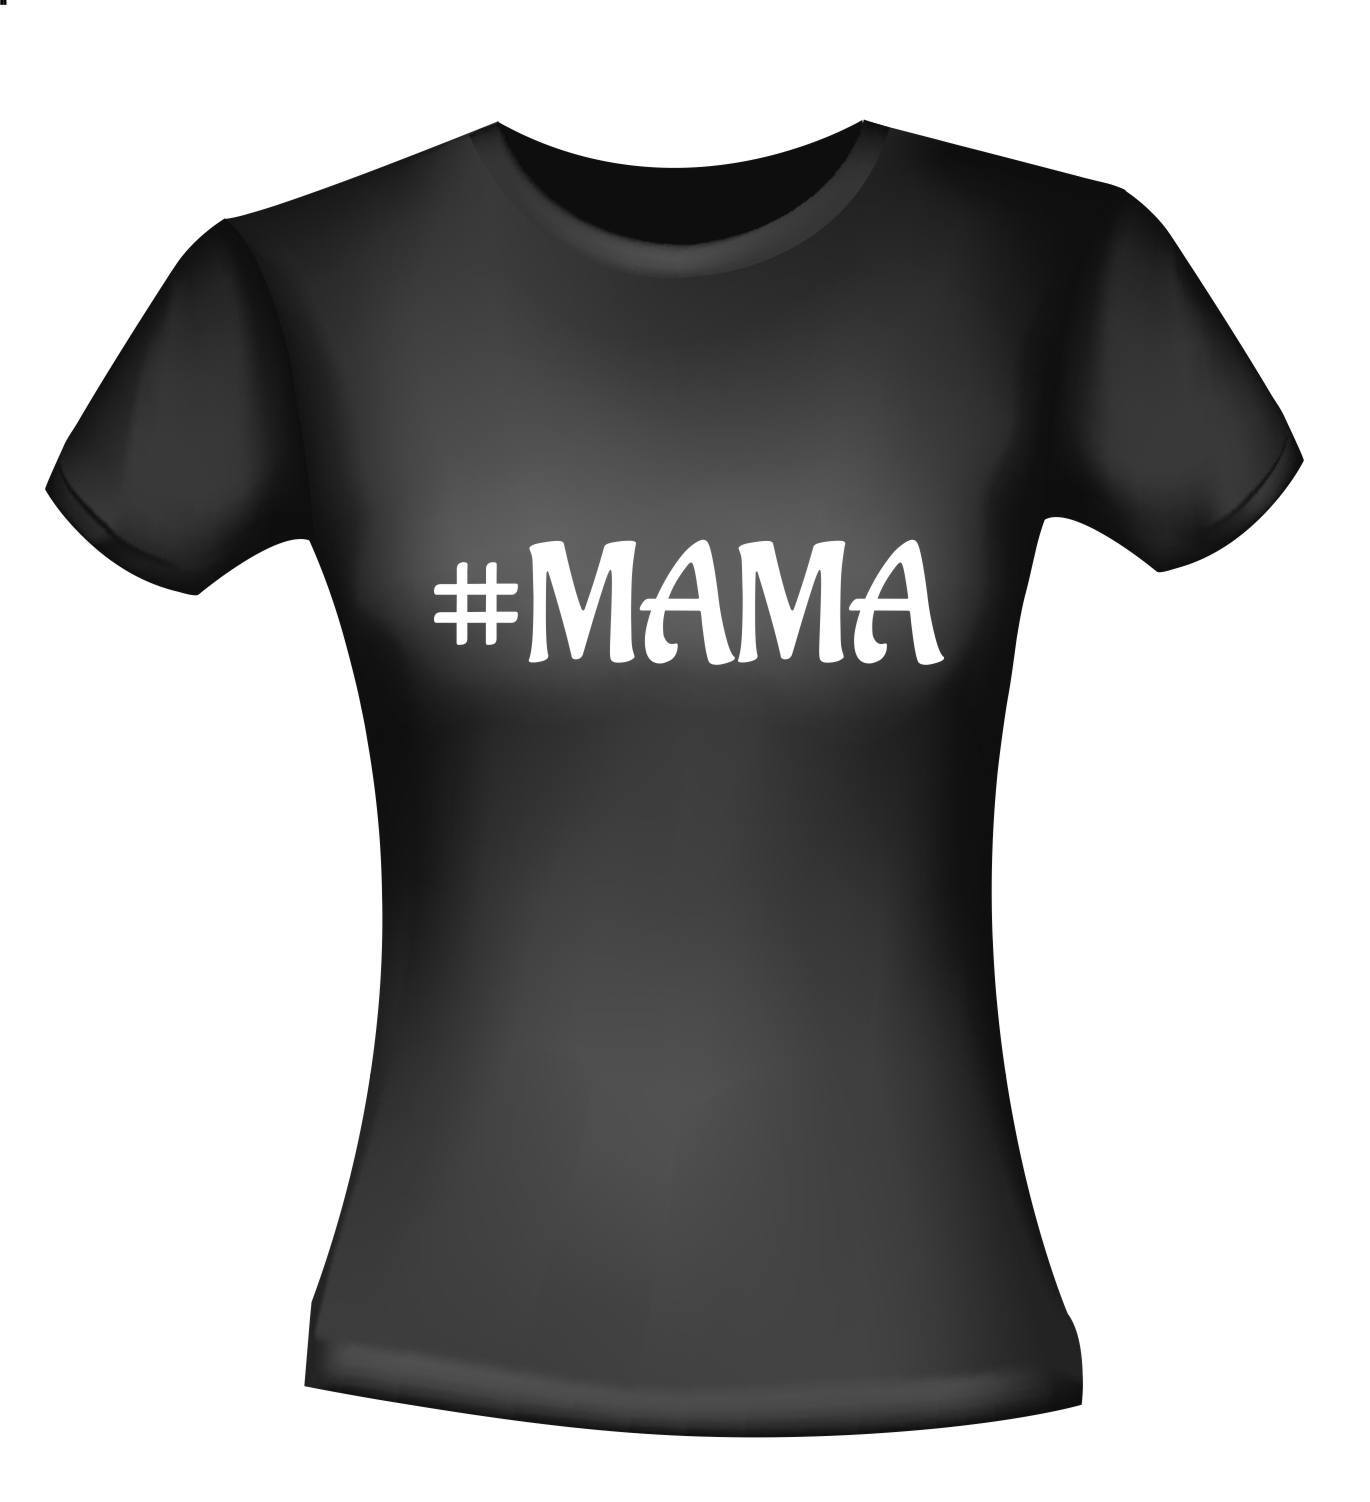 hashtag mama t-shirt